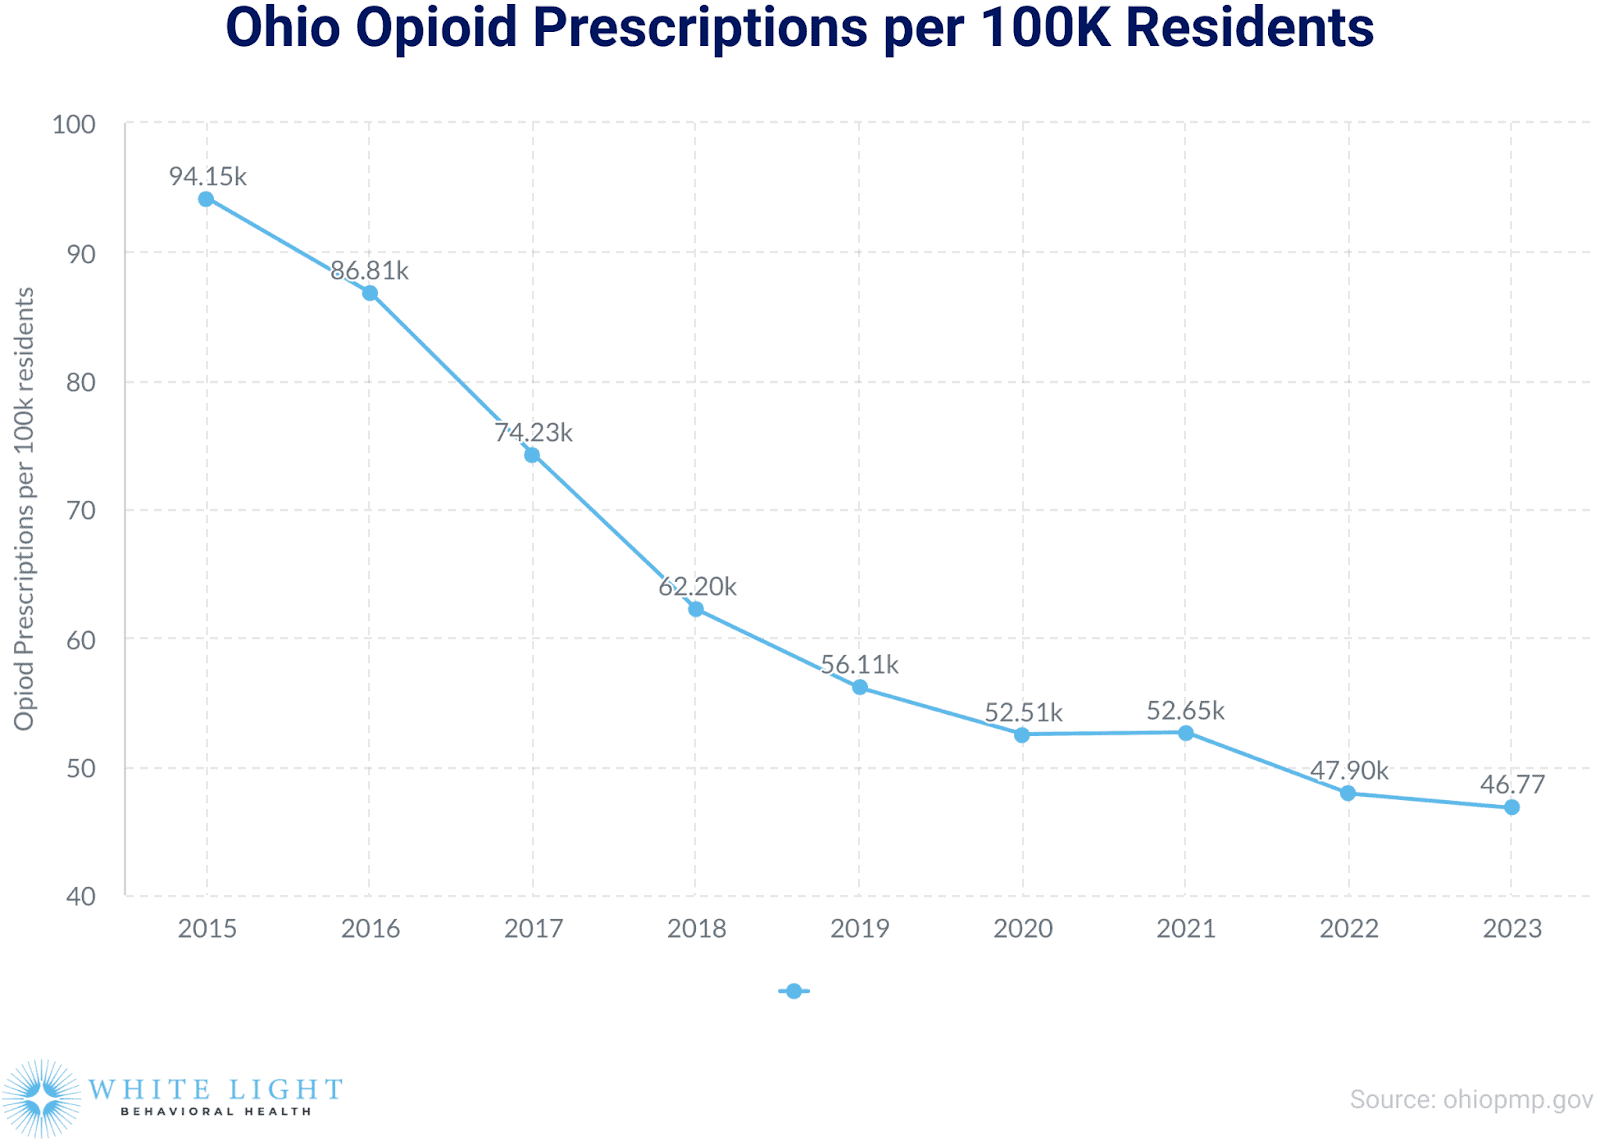 Ohio Opioid Prescriptions per 100k Residents